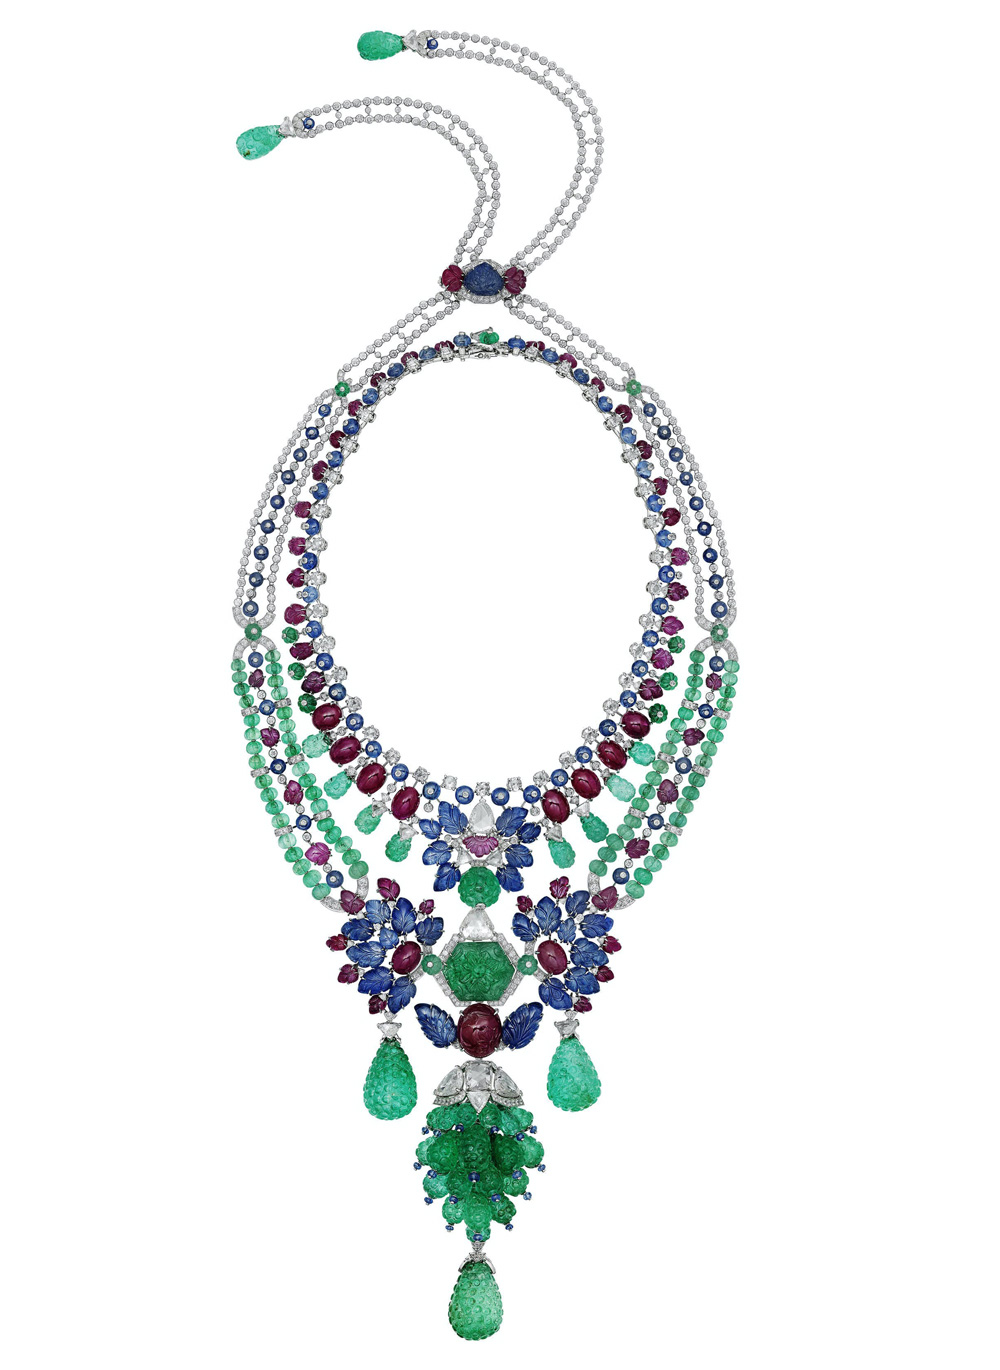 Cartier's Maharajah Necklace Worn 8 Different Ways - Tom + Lorenzo